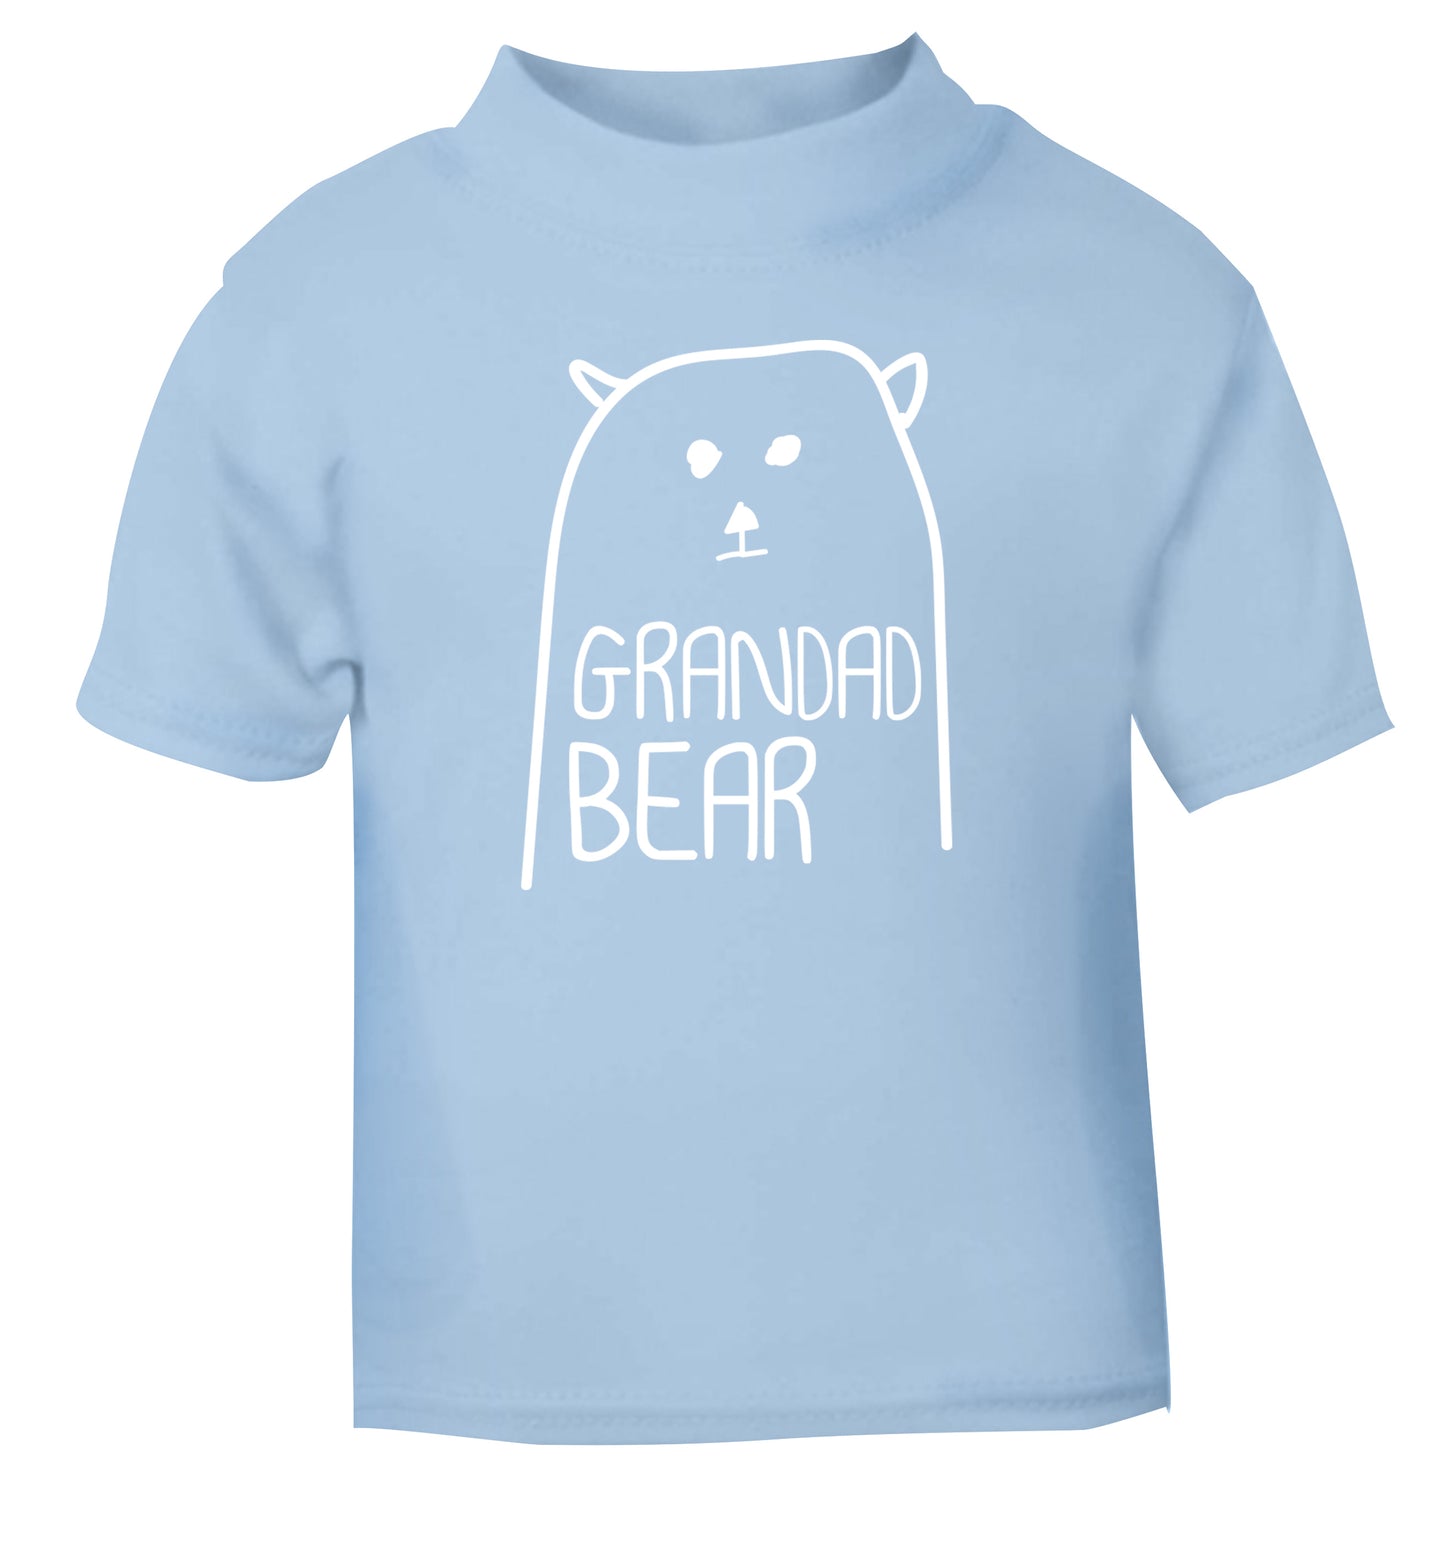 Grandad bear light blue Baby Toddler Tshirt 2 Years